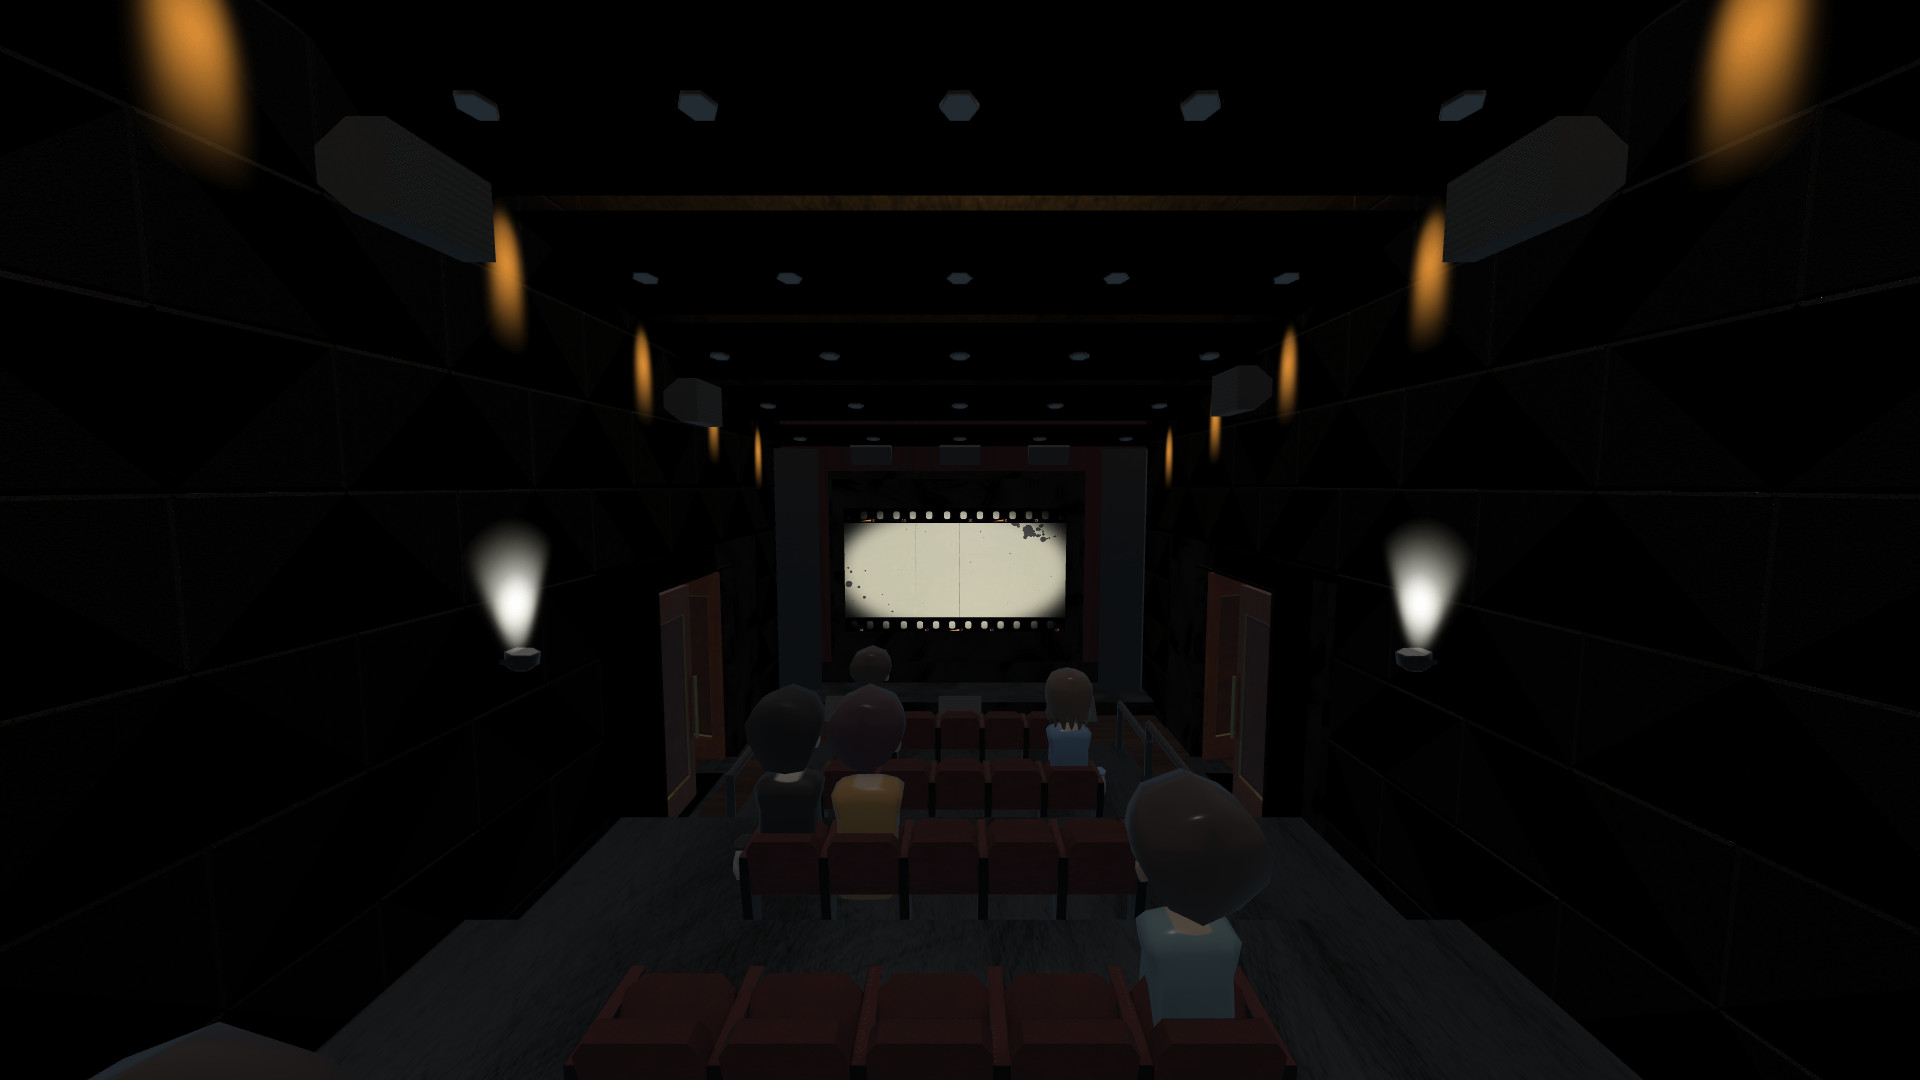 Theater